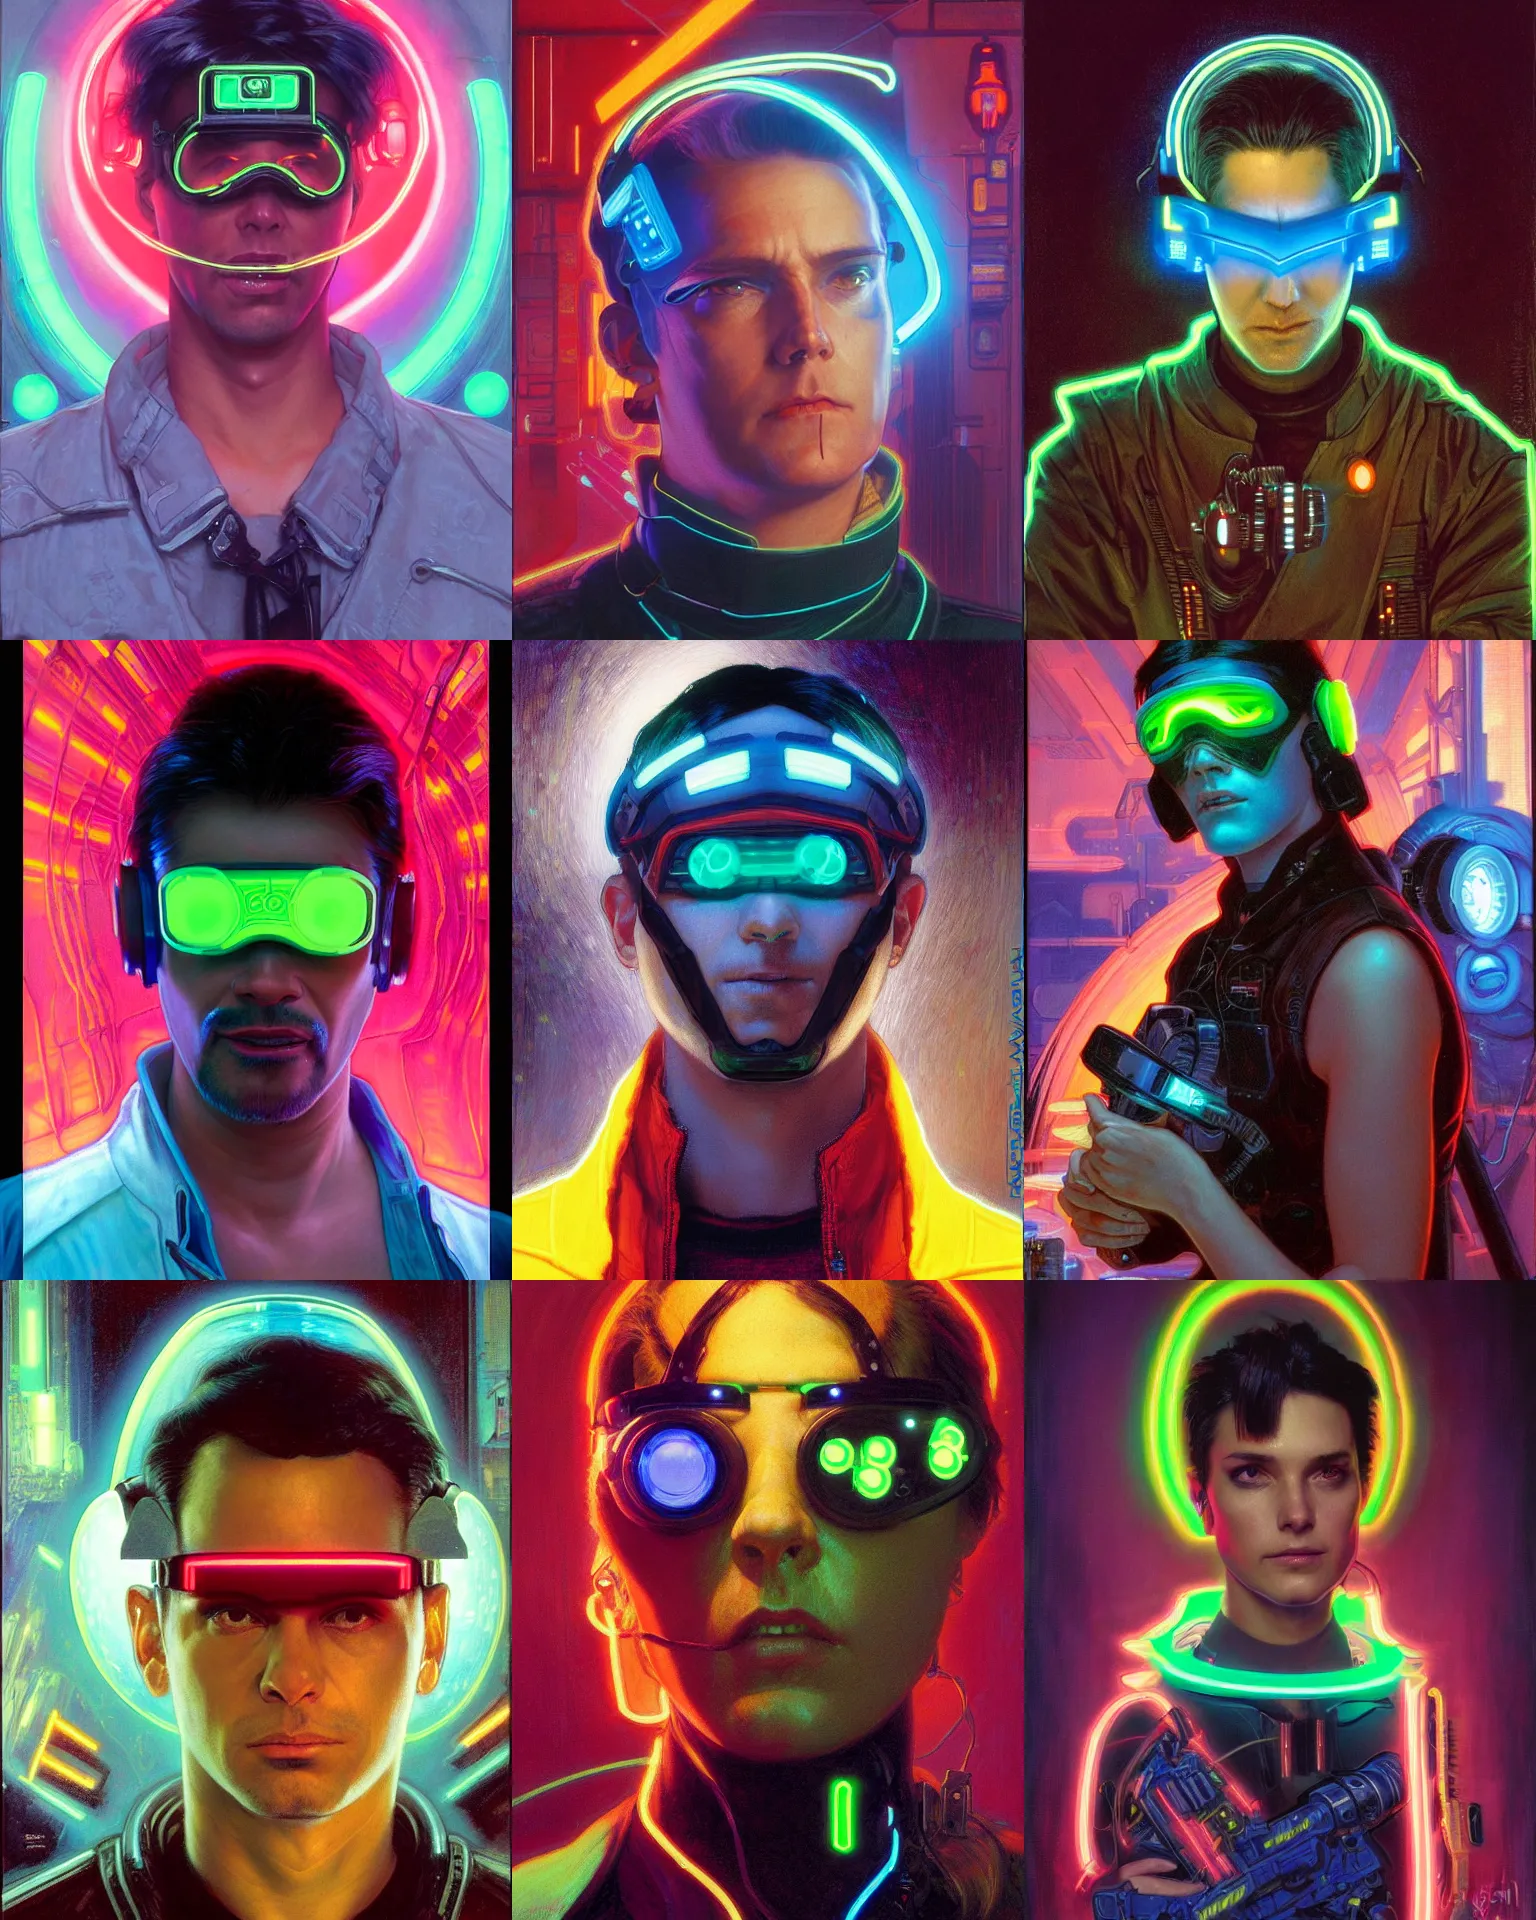 Prompt: neon cyberpunk hacker with glowing geordi visor and headset headshot portrait painting by donato giancola, kilian eng, john berkley, hayao miyazaki, alphonse mucha, mead schaeffer fashion photography